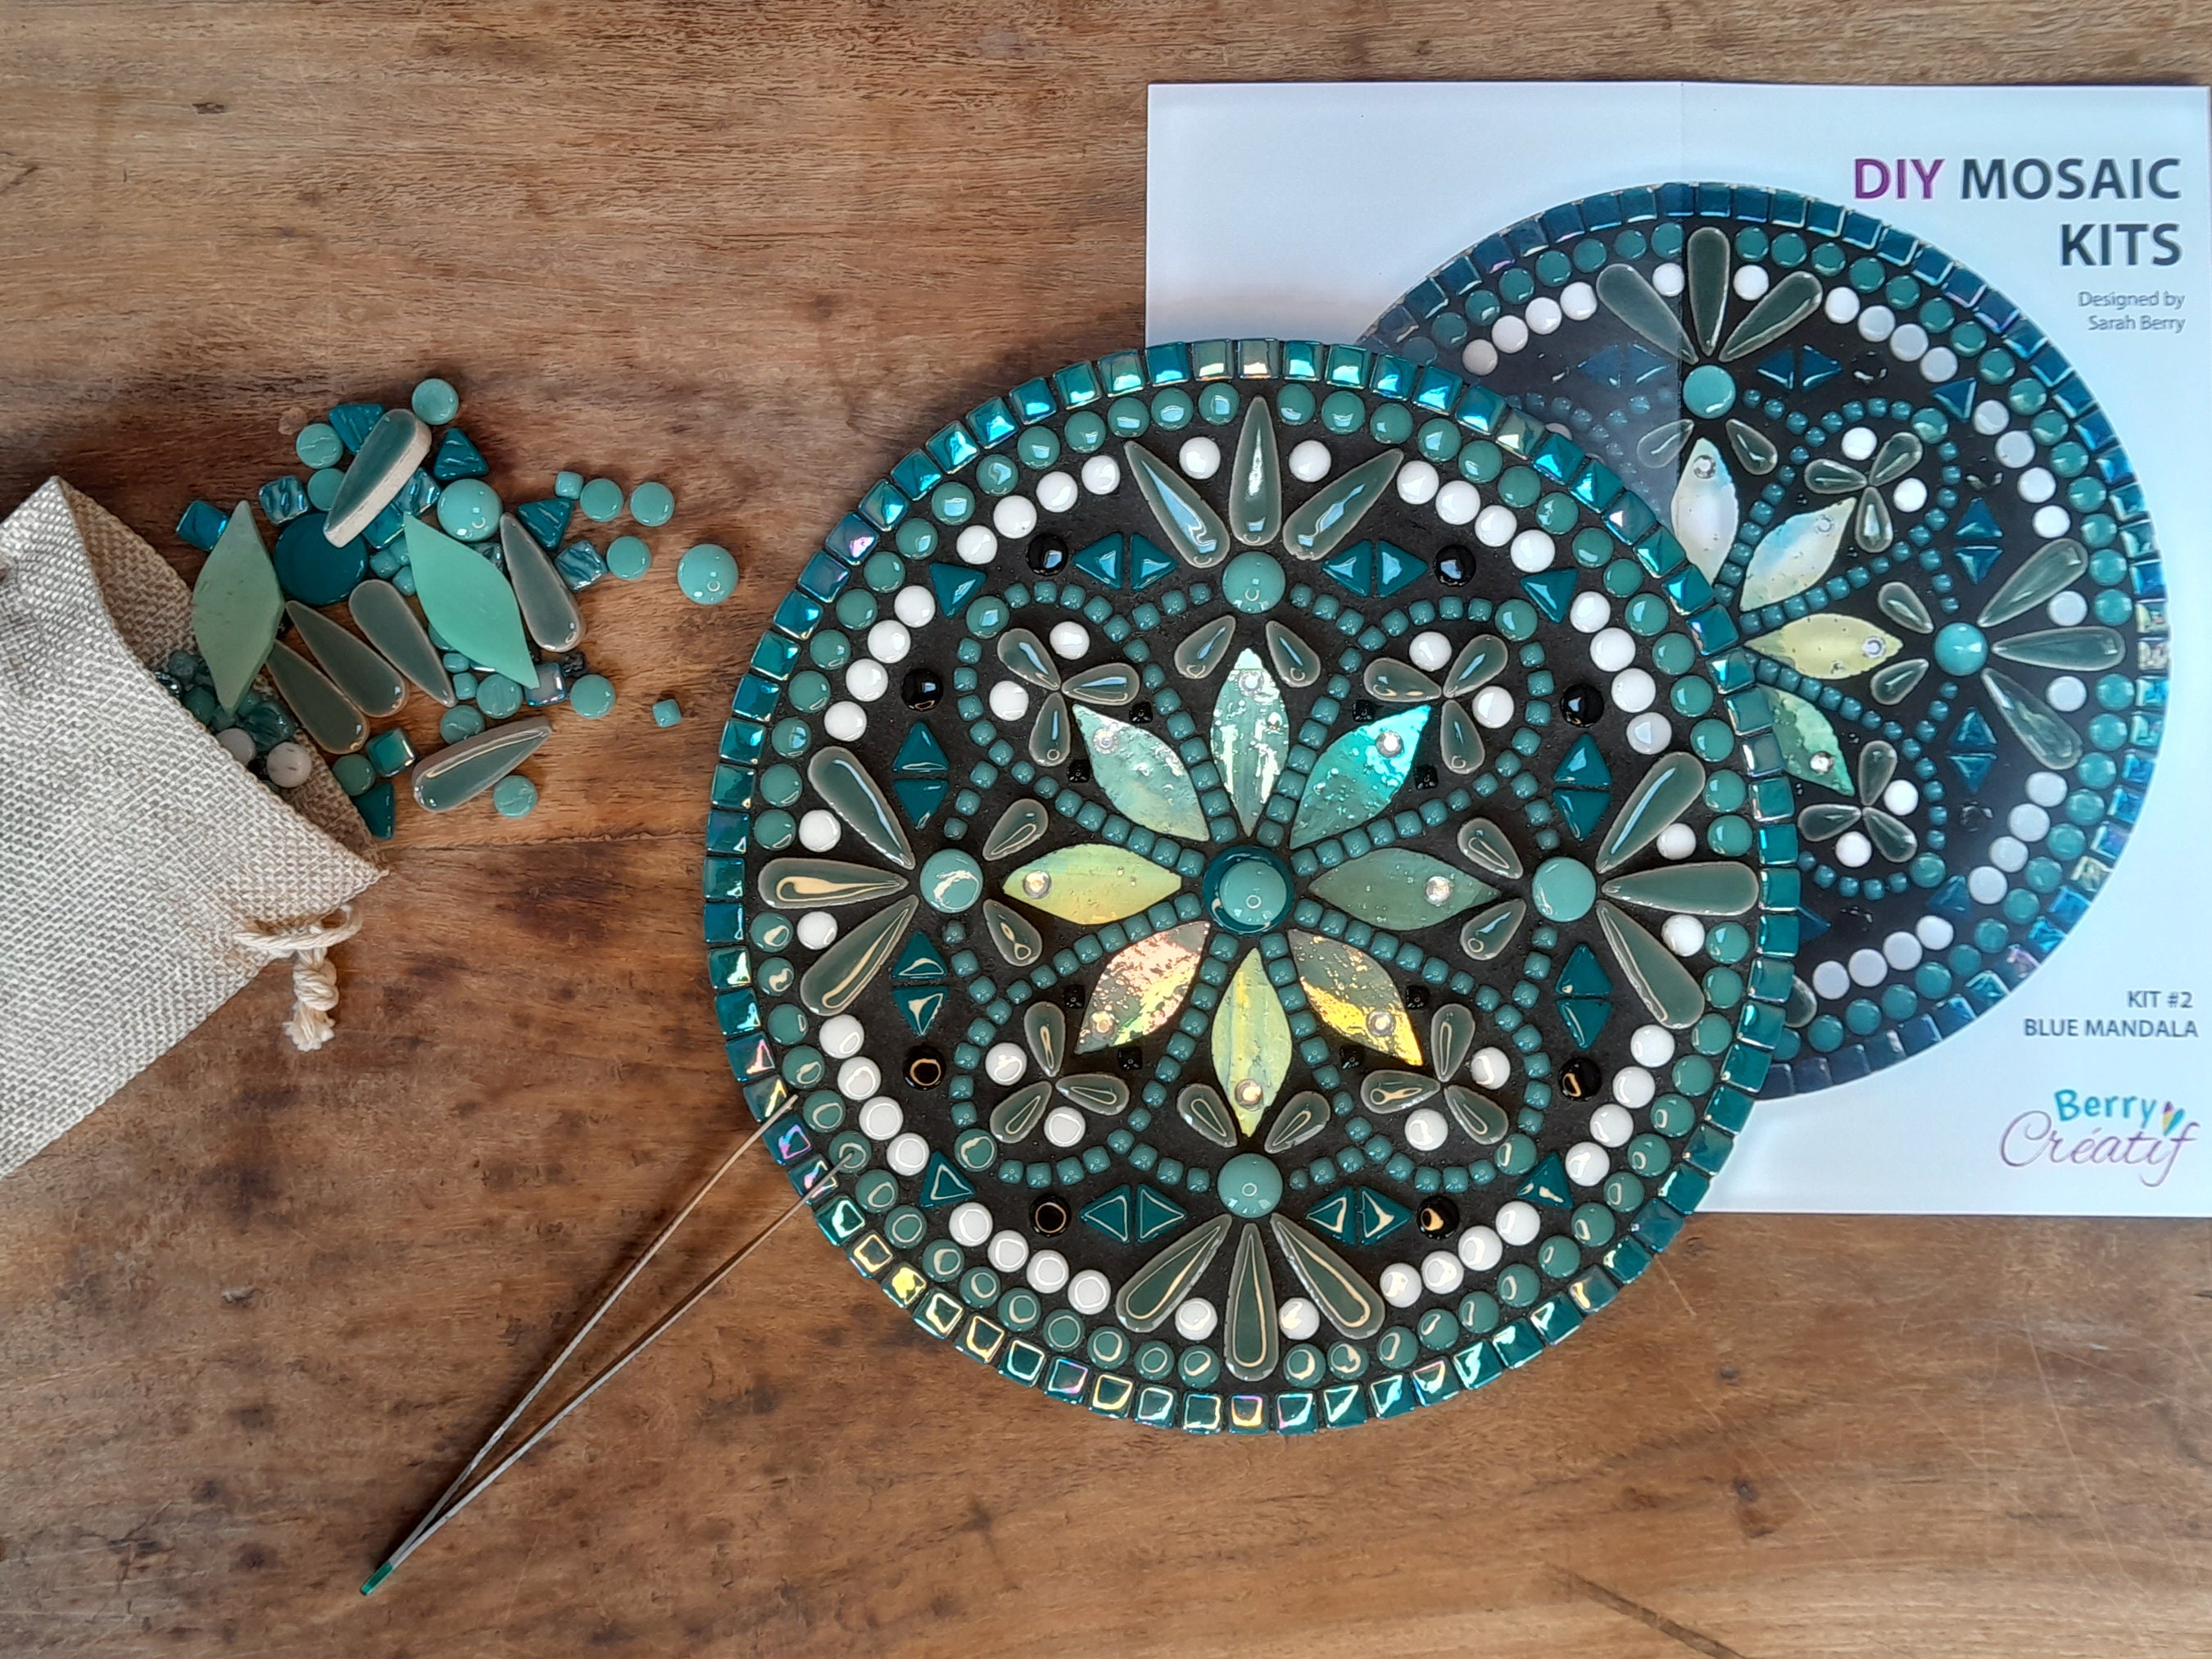  Jashlife DIY Mosaic Craft Draw Kits Mosaic Tiles Adult